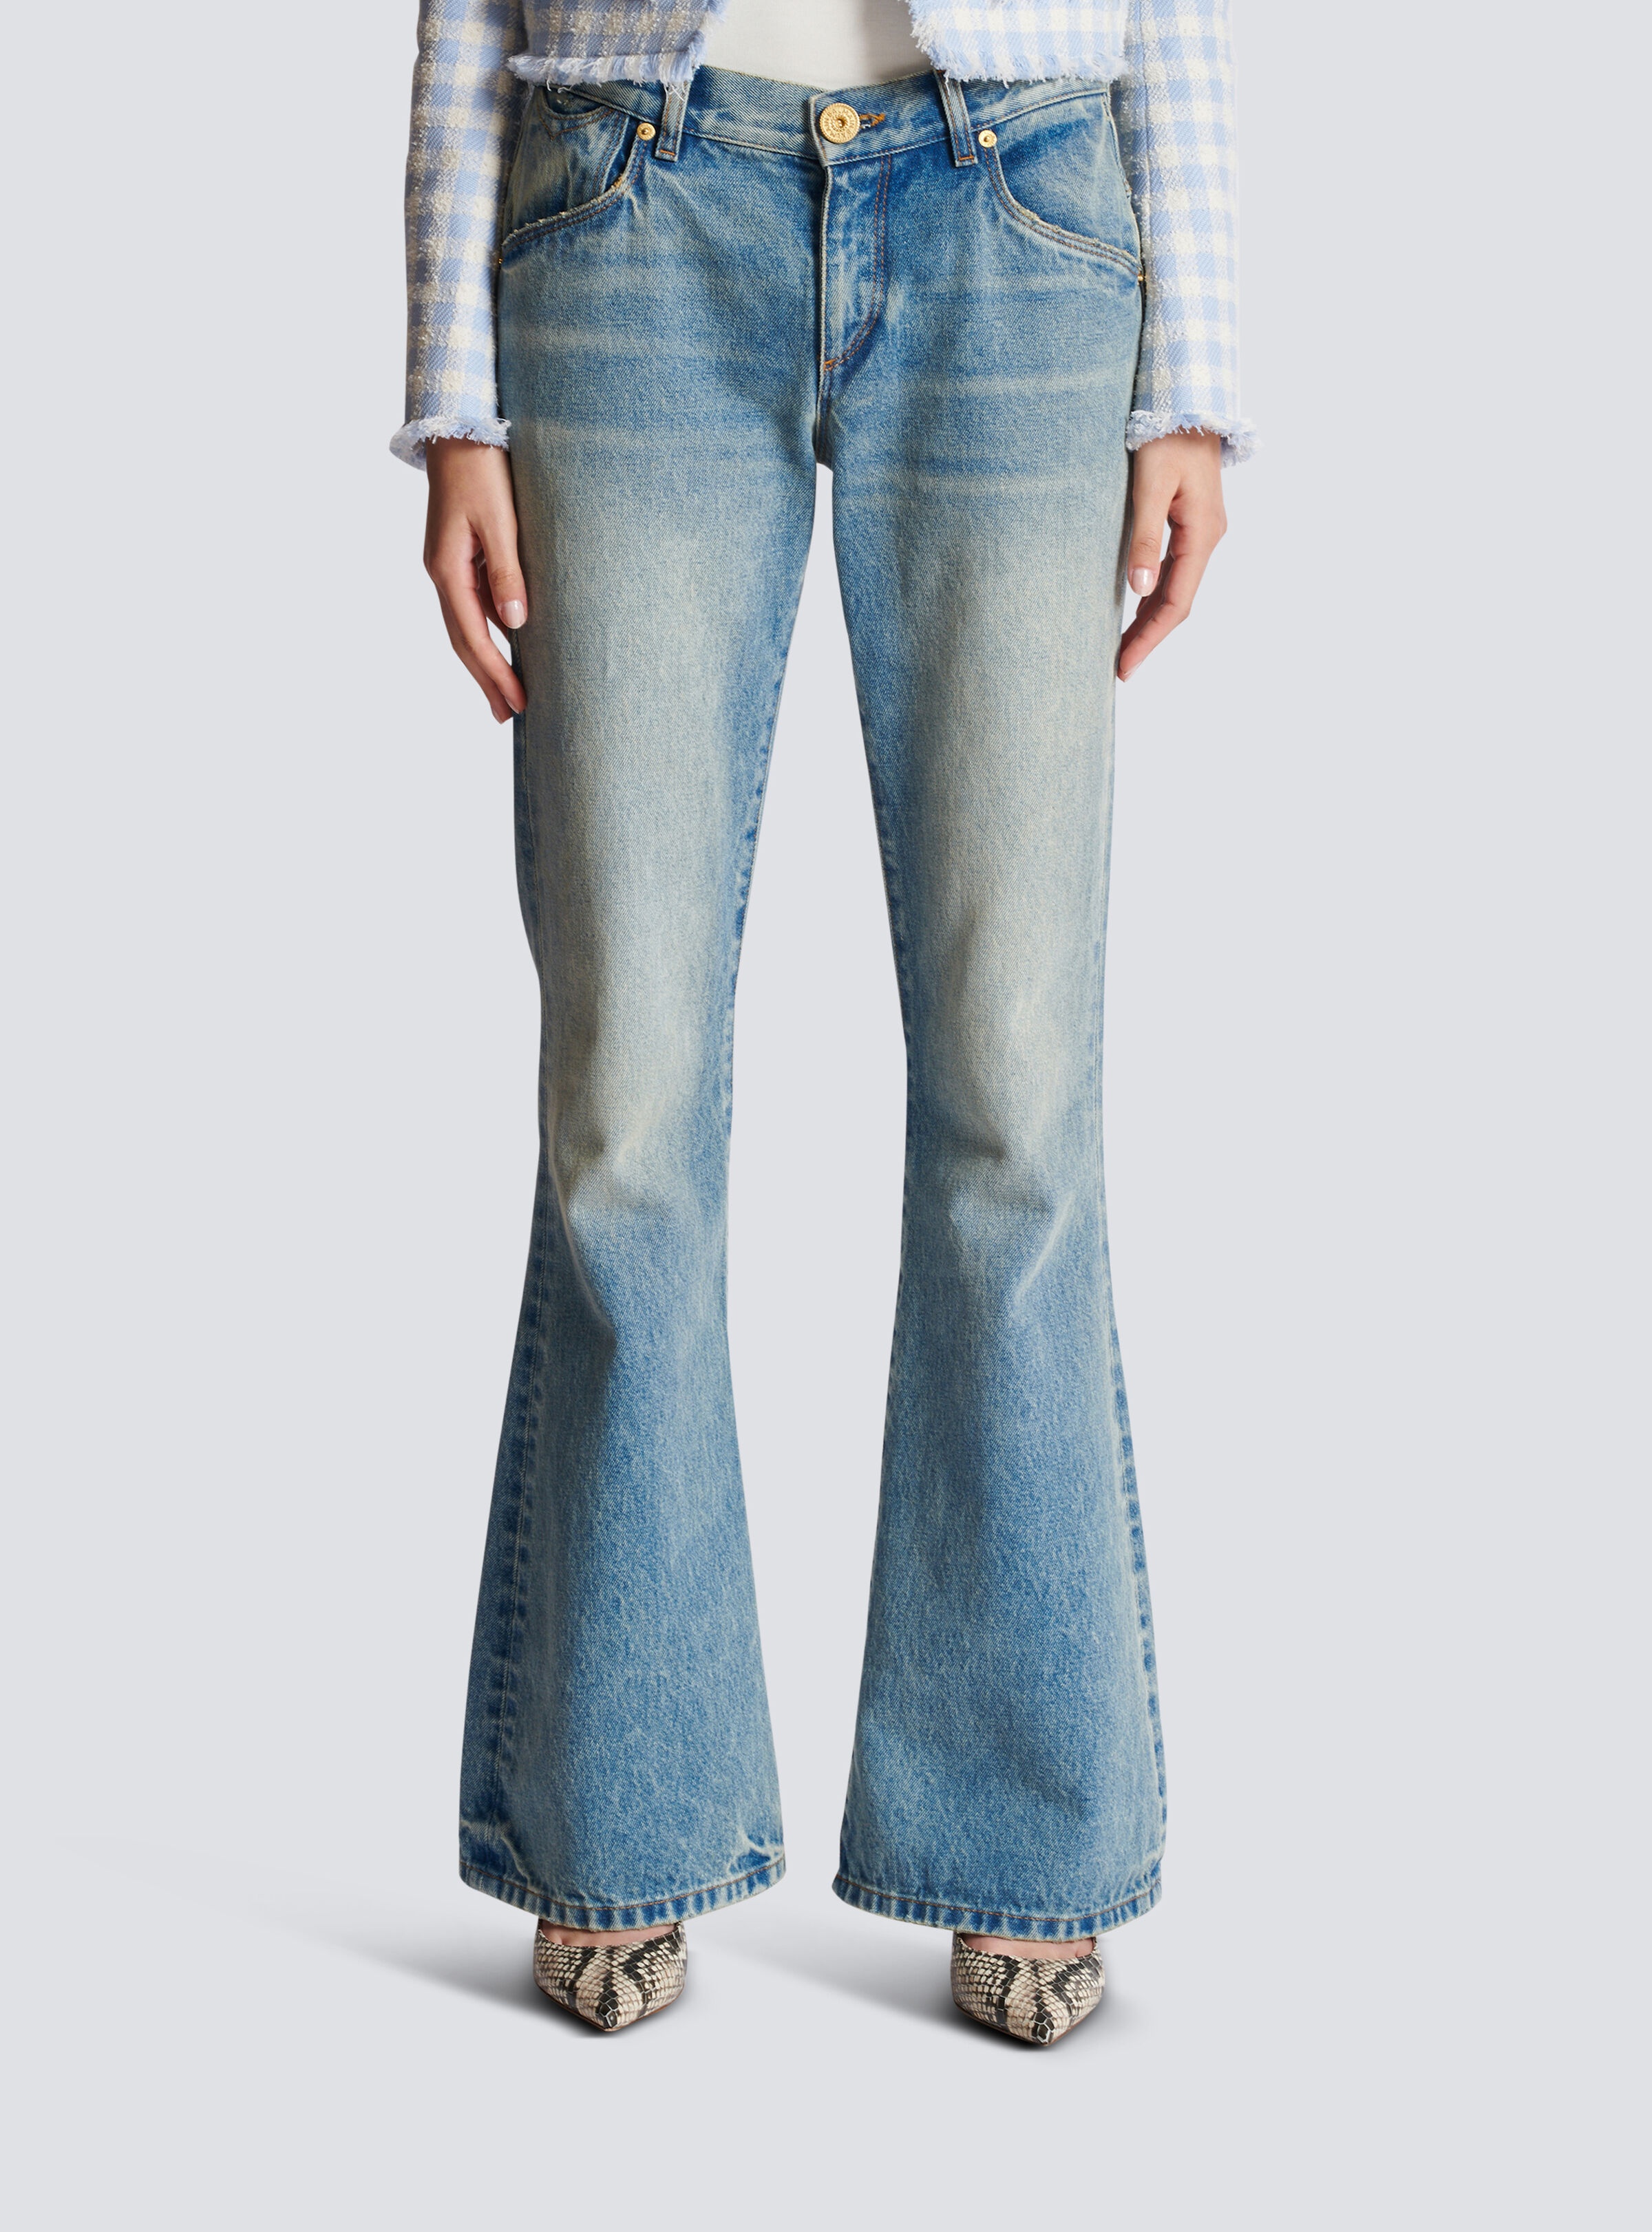 Western bootcut denim jeans - 5